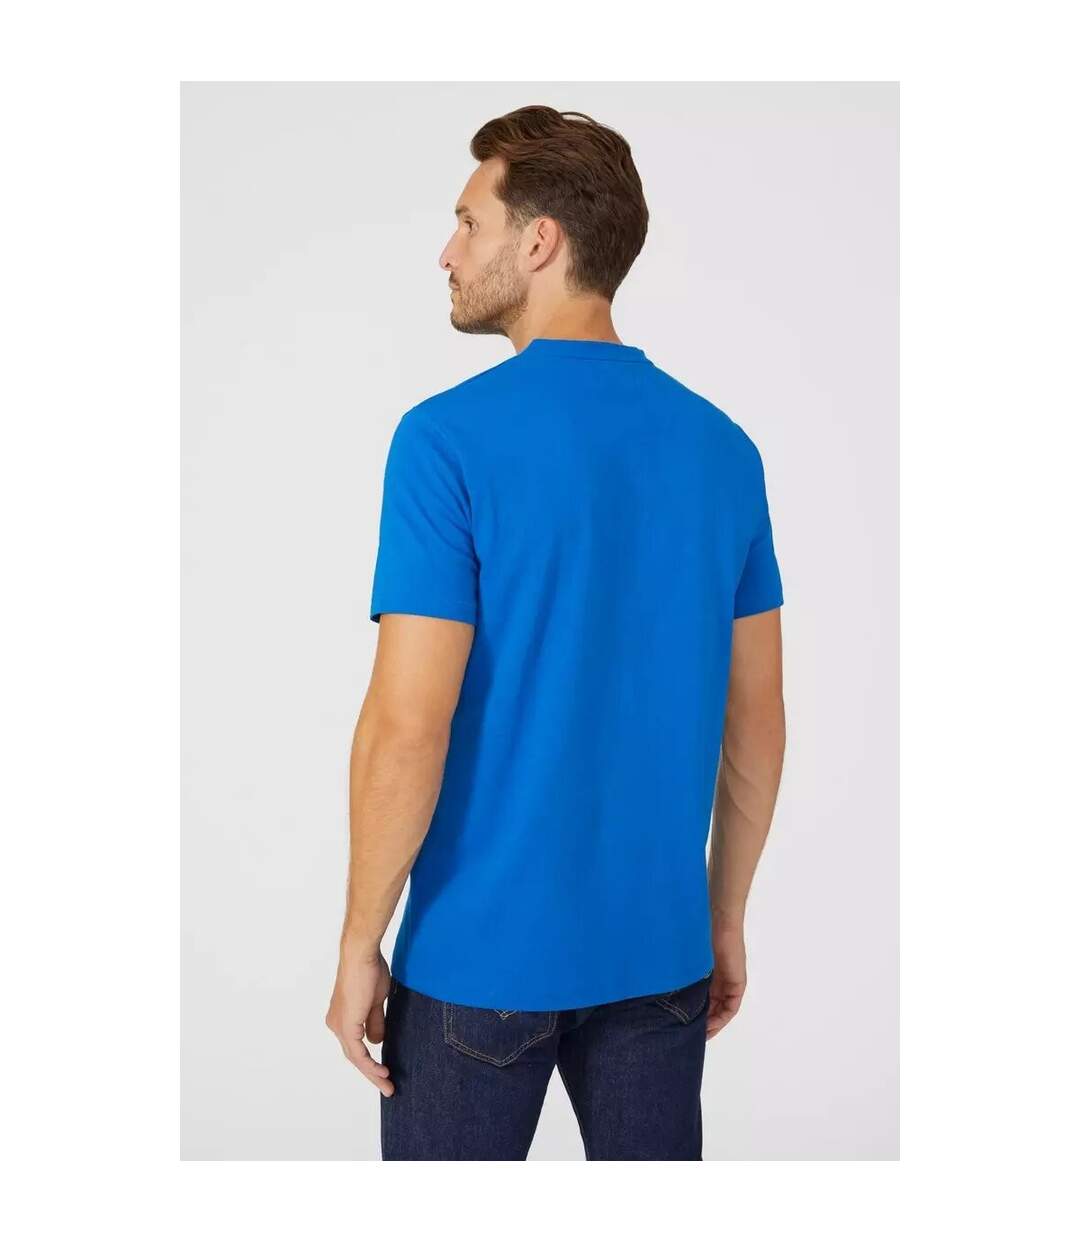 Mantaray - T-shirt - Homme (Bleu sarcelle) - UTDH440